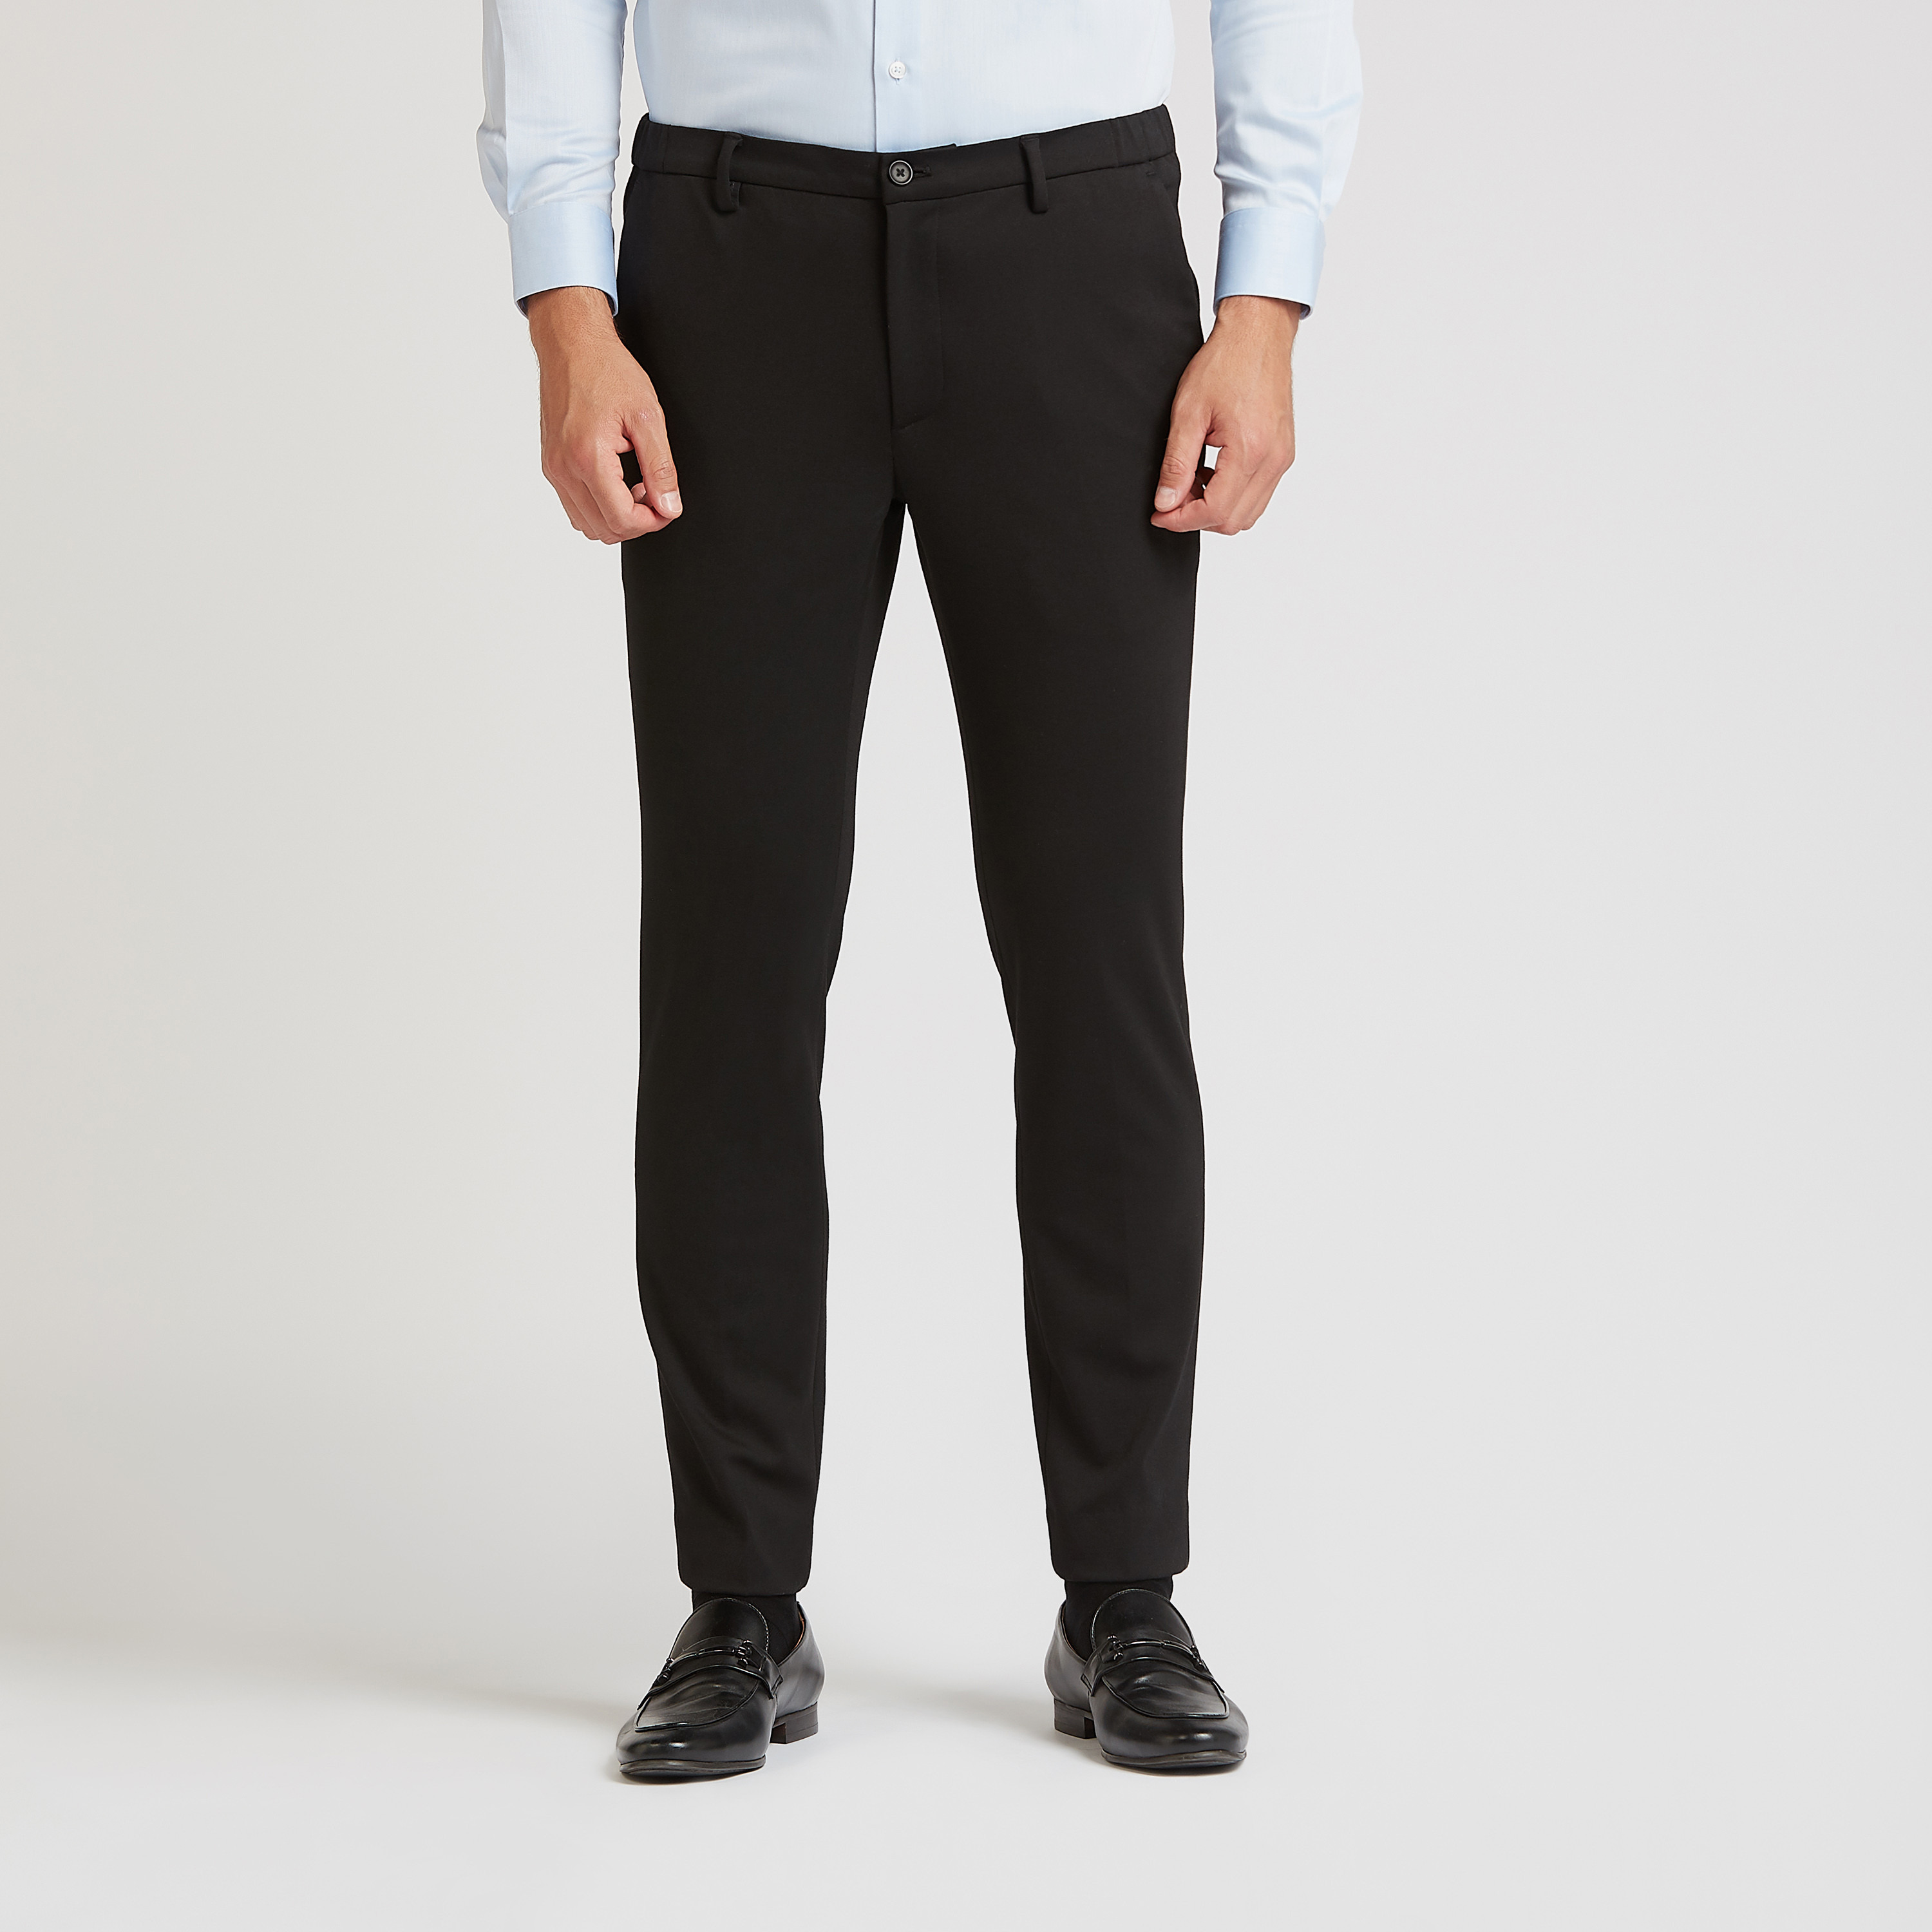 Mens Slim Fit Mid Rise Stylist Skinny Pants Casual Stretch Dress Formal  Trousers | eBay